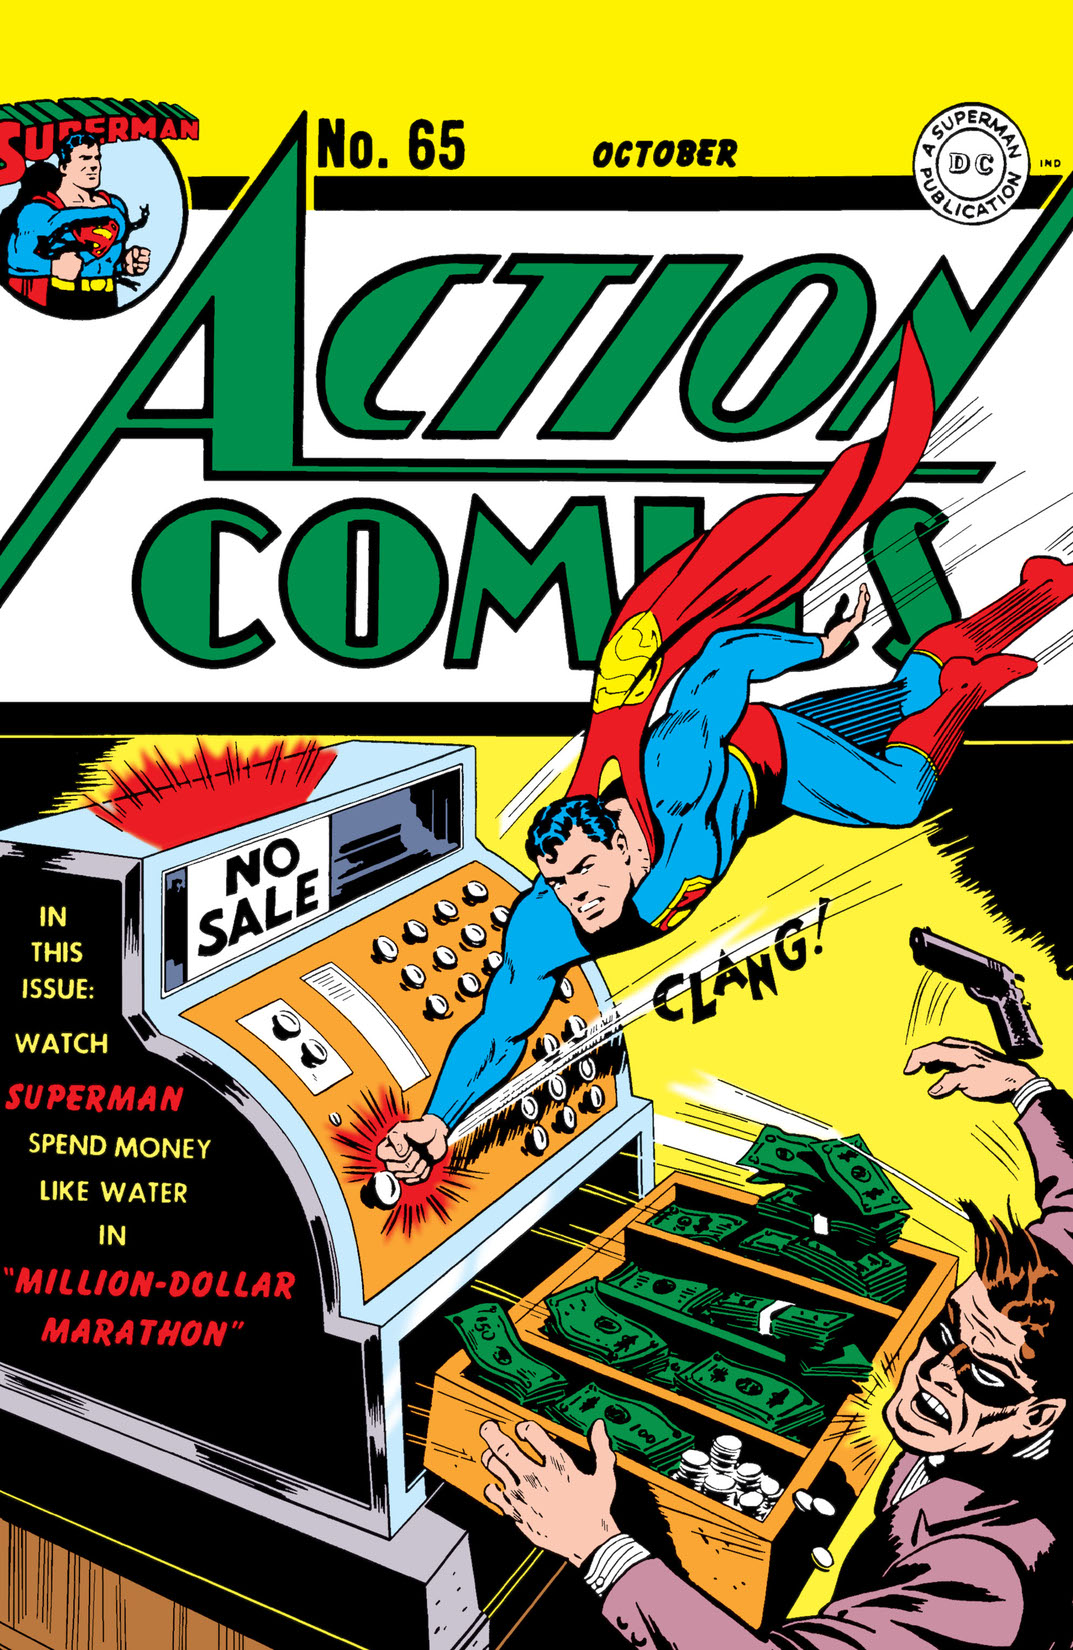 Action Comics (1938-) #65 preview images